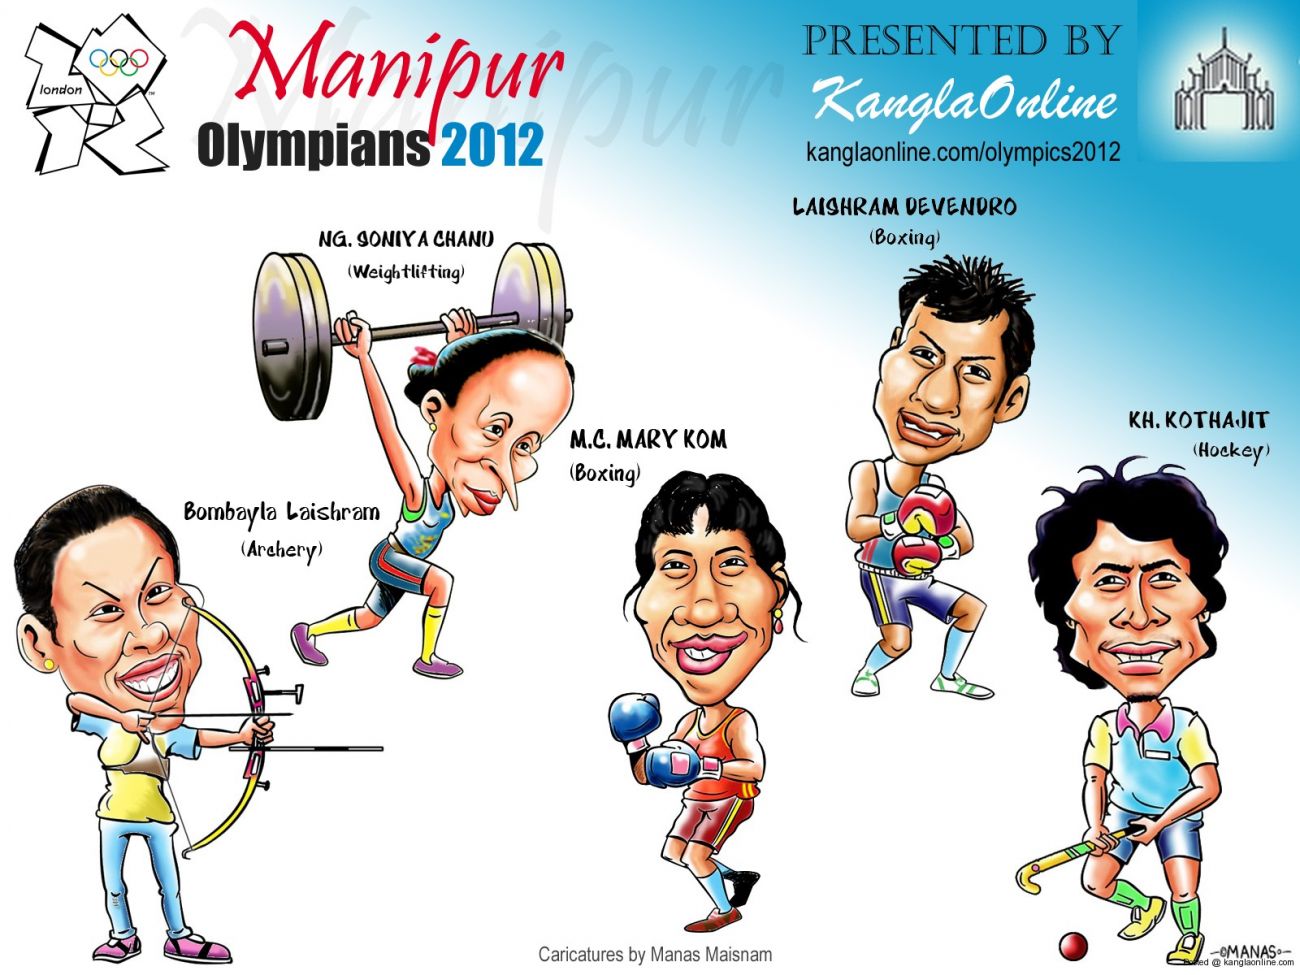 Manipuri Olympians for London - 2012 Olympics